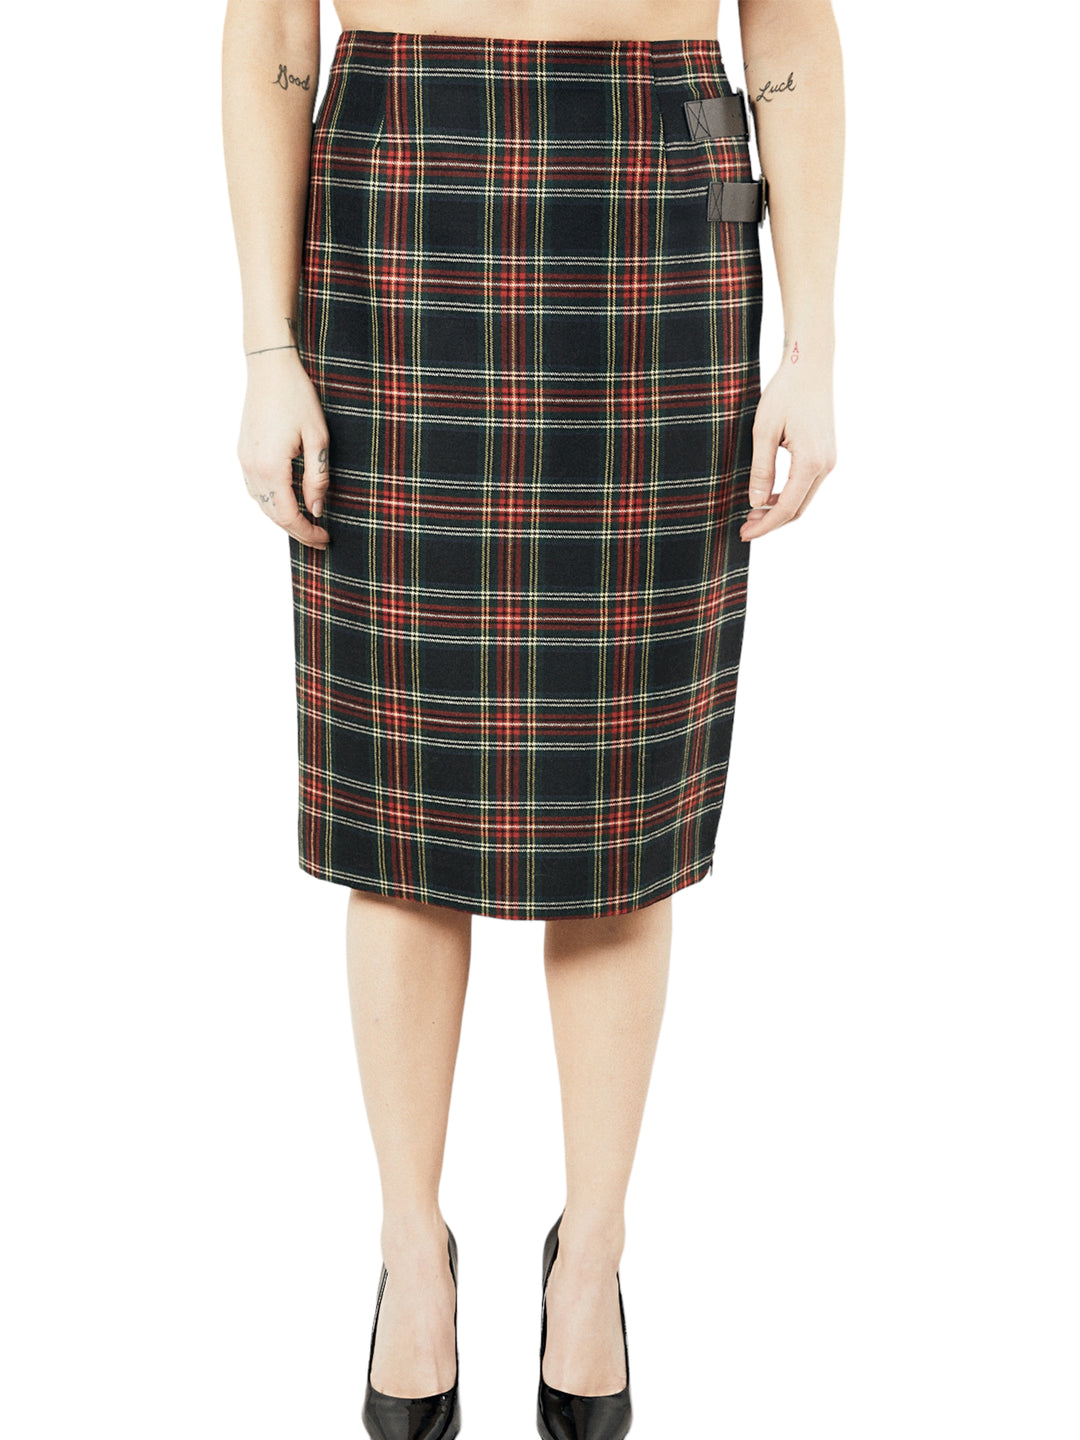 Plaid Pencil Skirt (50% OFF)